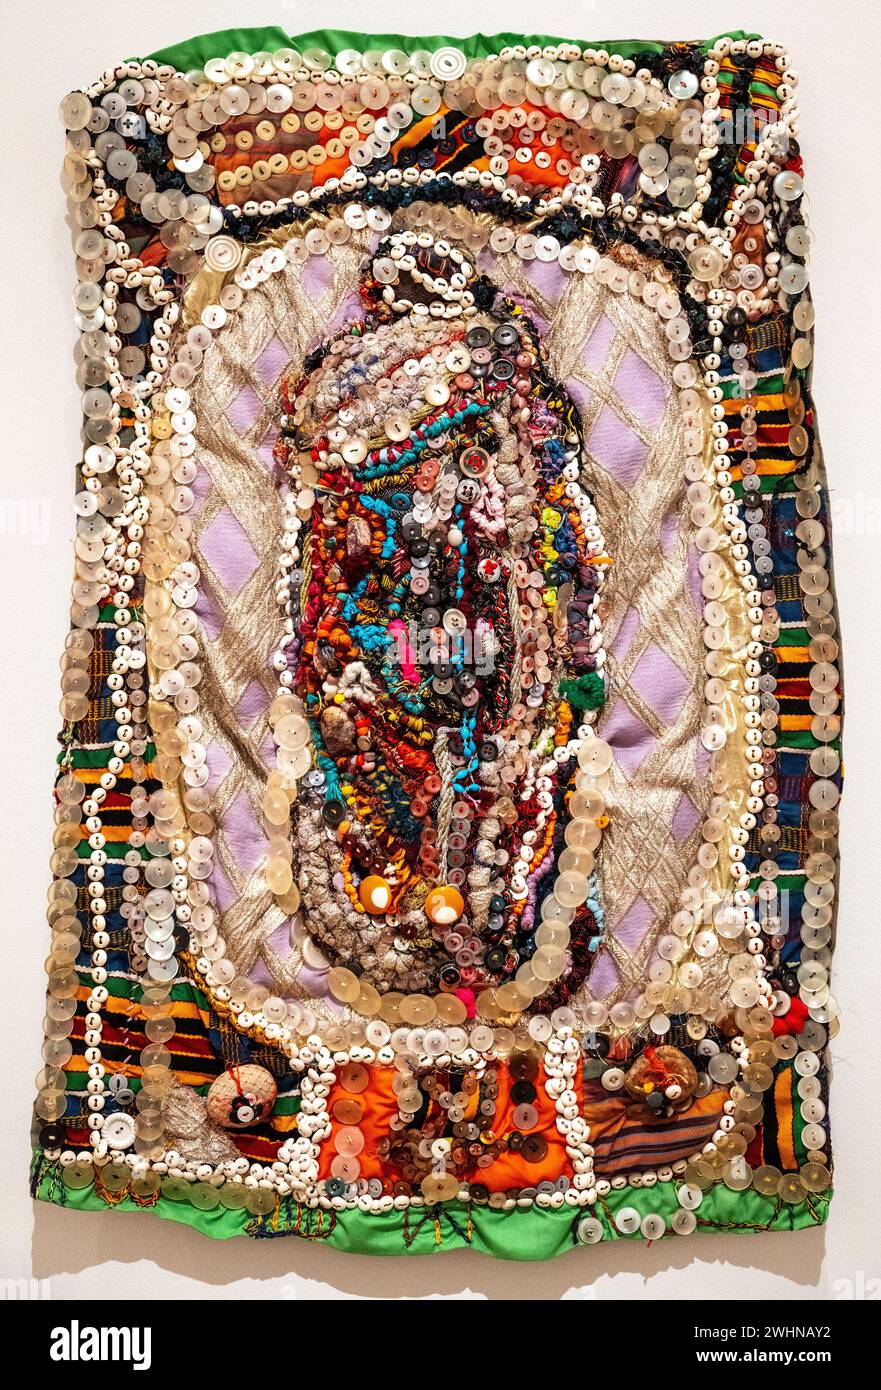 Elizabeth Talford Scott handgenähte Stoffkunst aus dem Jahr 1993-96 namens „Temple“ im Baltimore Museum of Art Stockfoto